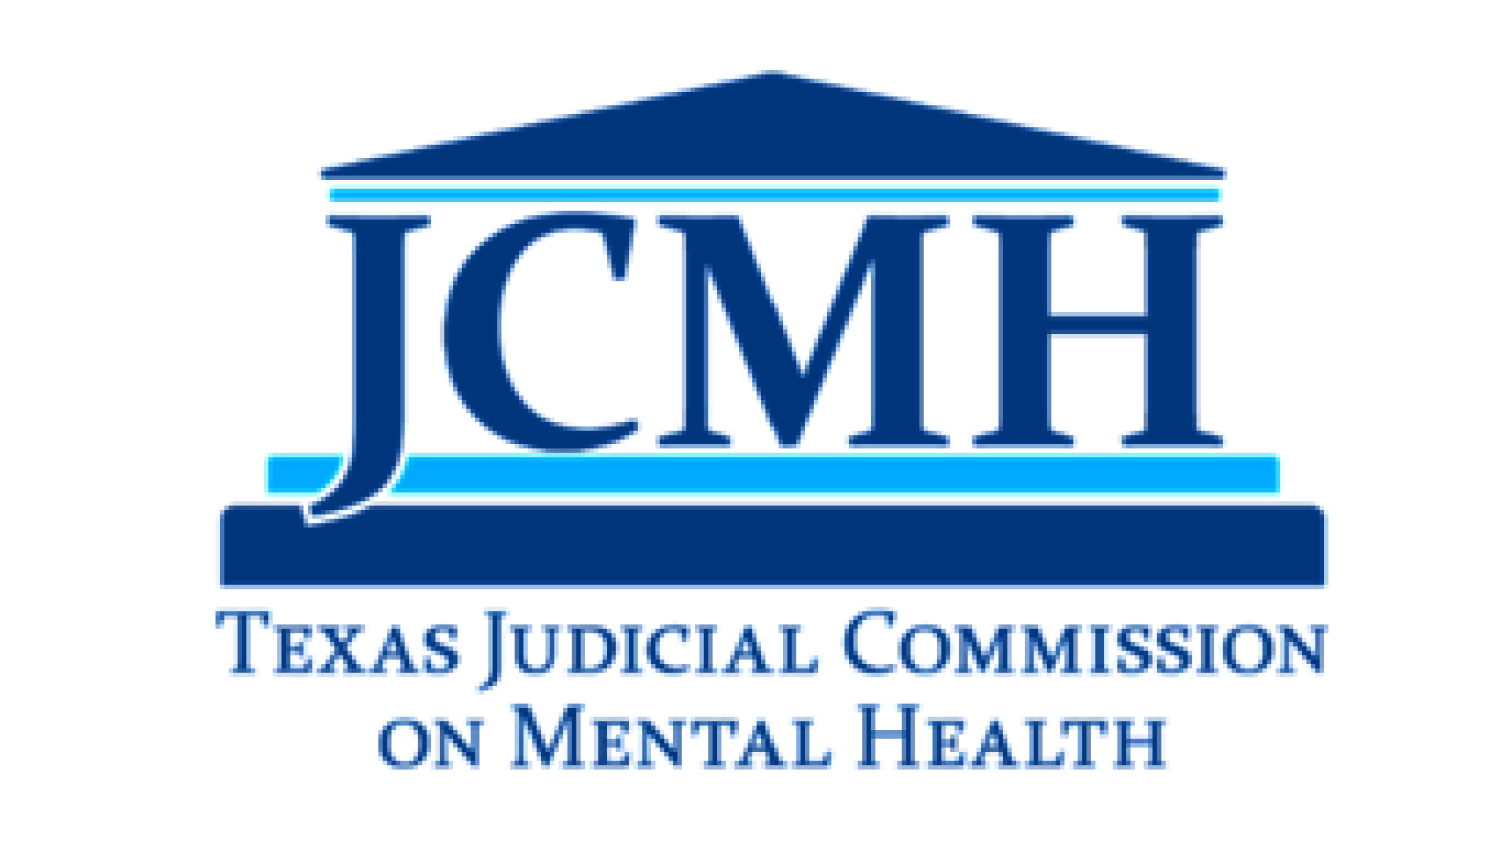 Texas Judicial Commission on Mental Health logo